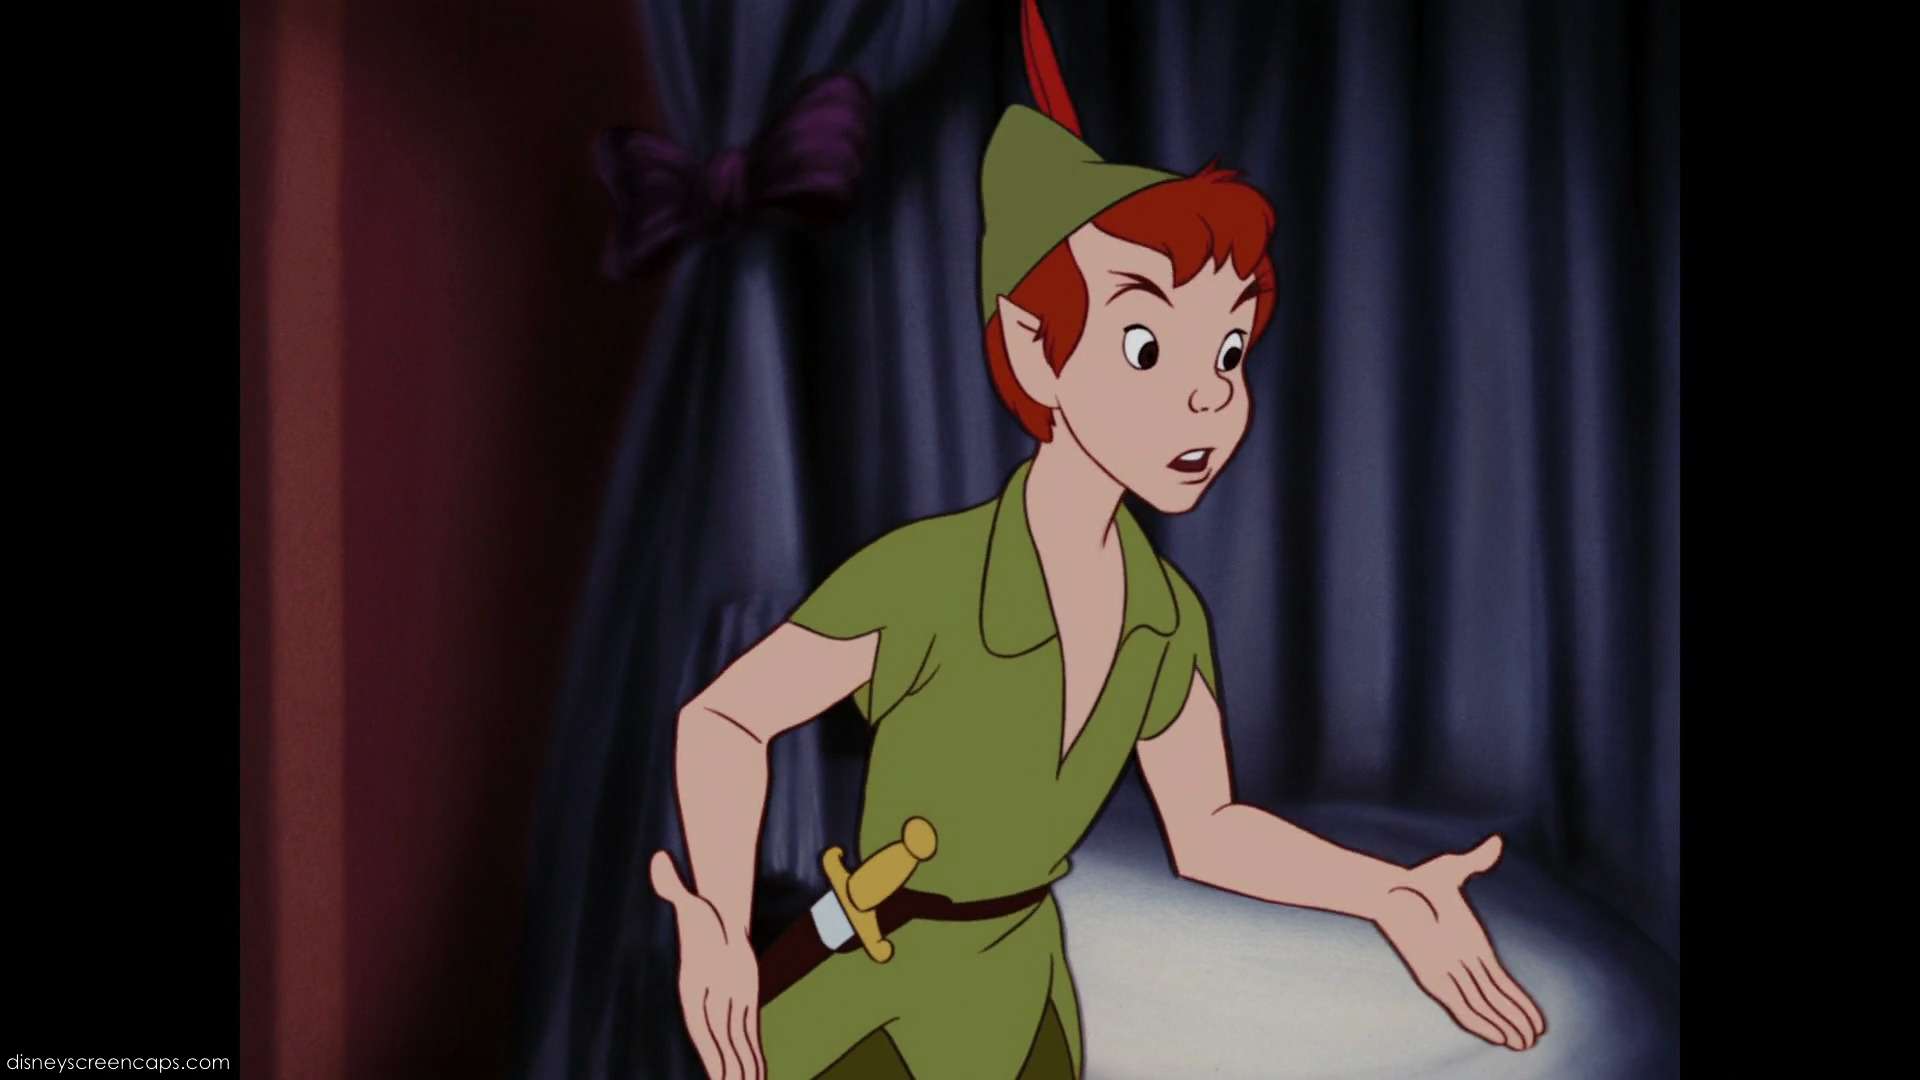 Young bayani of Disney Image: Peter Pan.